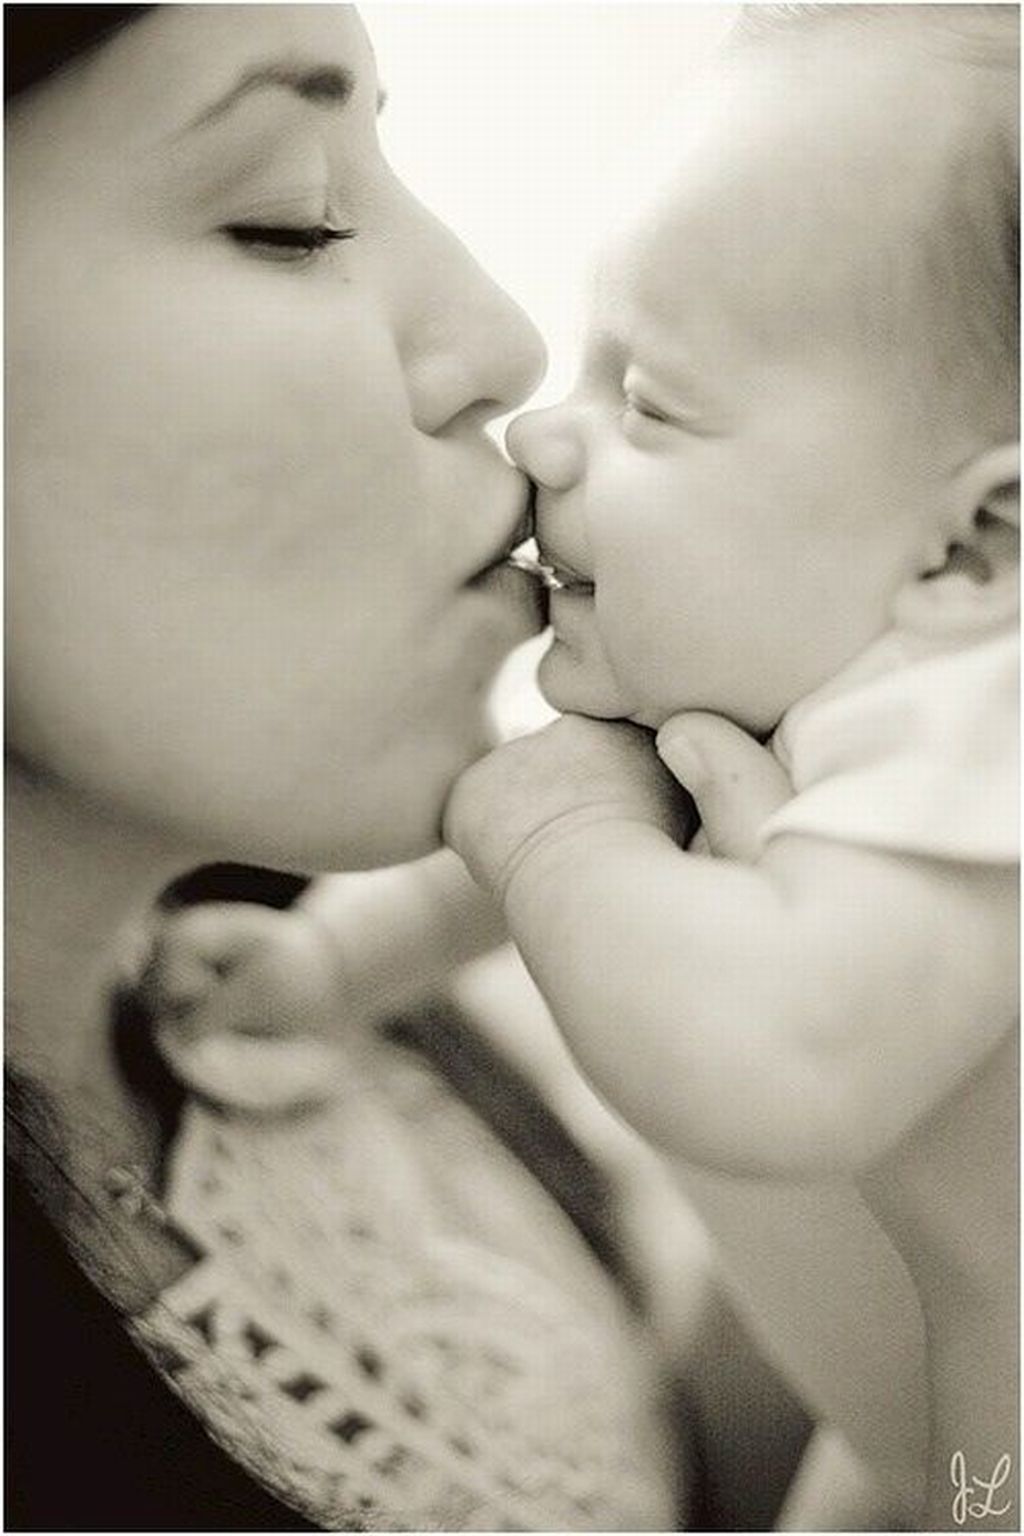 Видео целовать маму. Поцелуй матери. Ребенок целует. Мама целует младенца. Детский поцелуй.